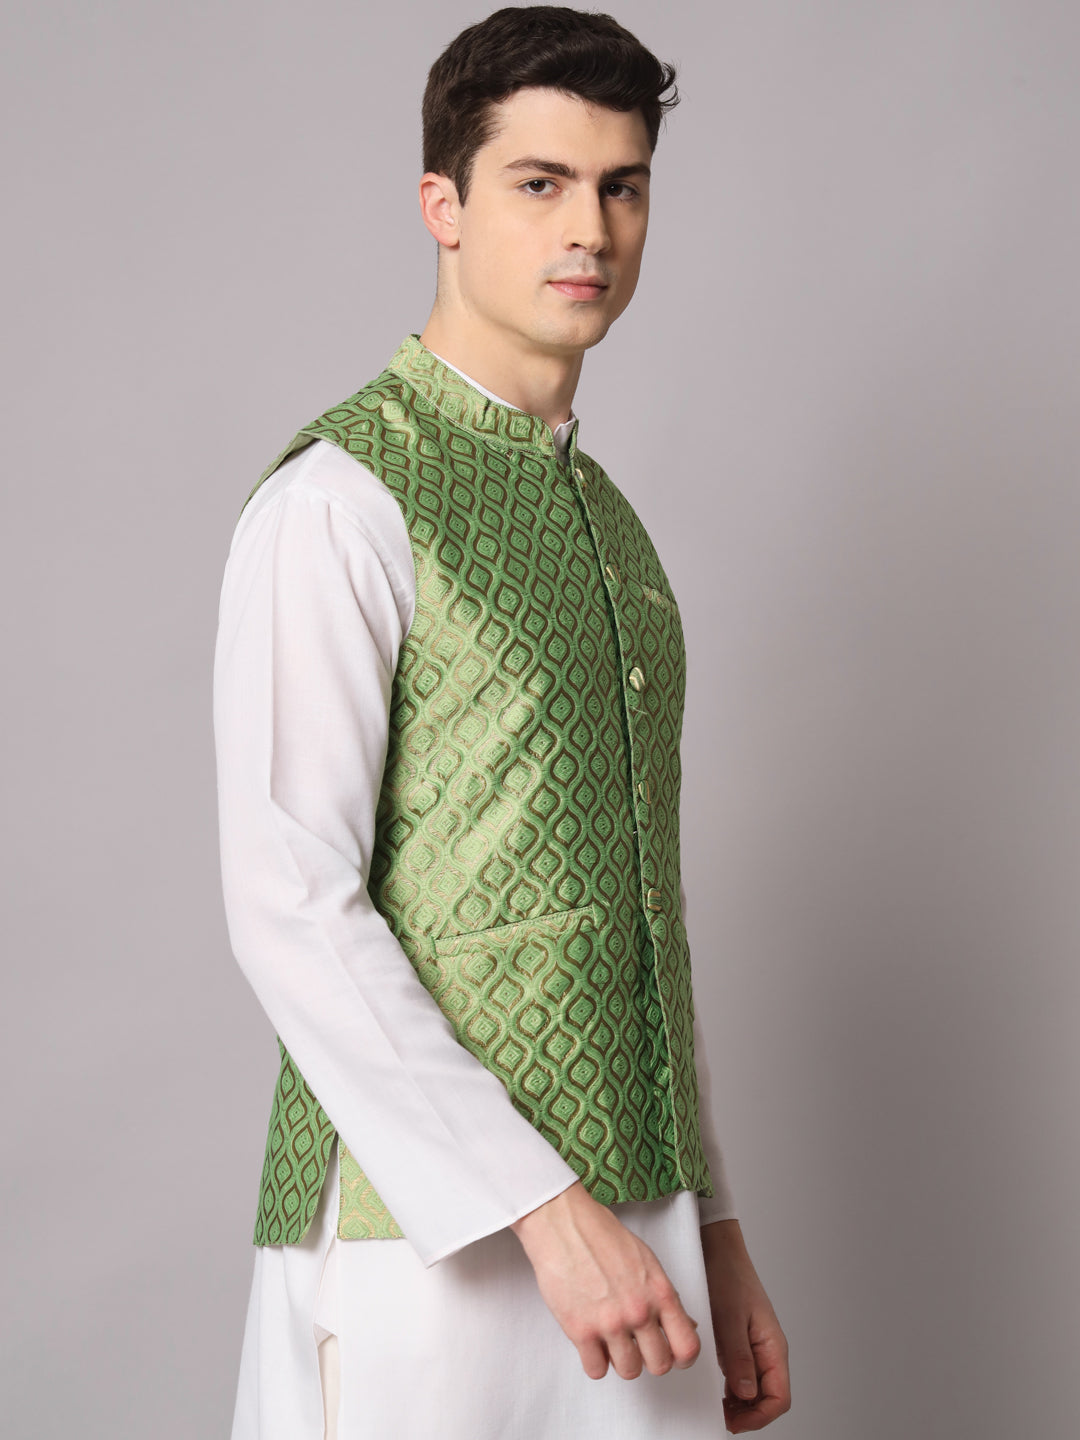 Men's Sleeveless Ethnic Jacket Self Design Nehru Jacket